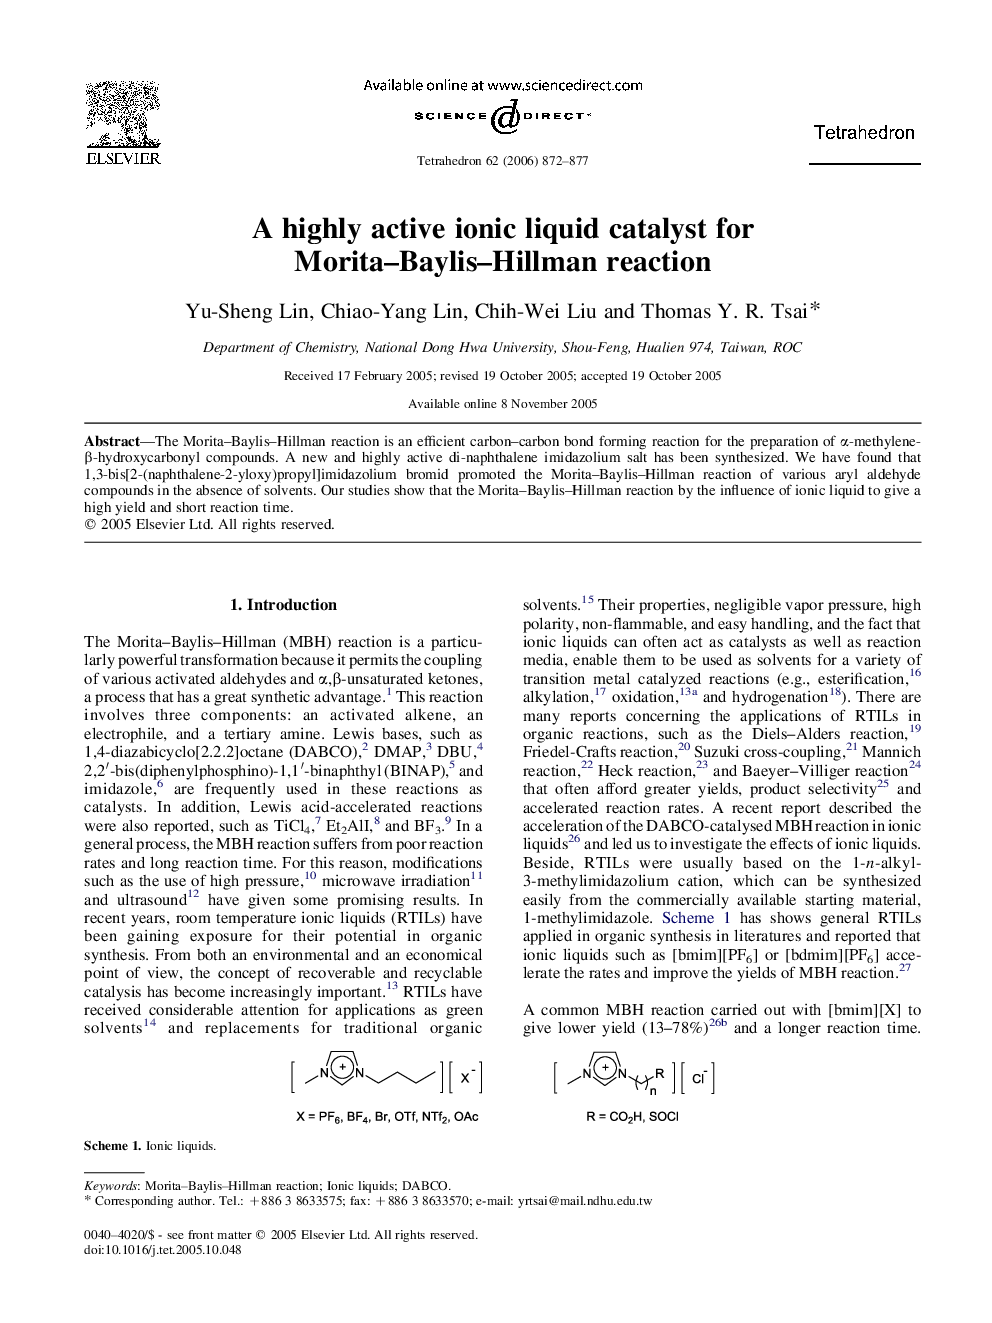 A highly active ionic liquid catalyst for Morita-Baylis-Hillman reaction